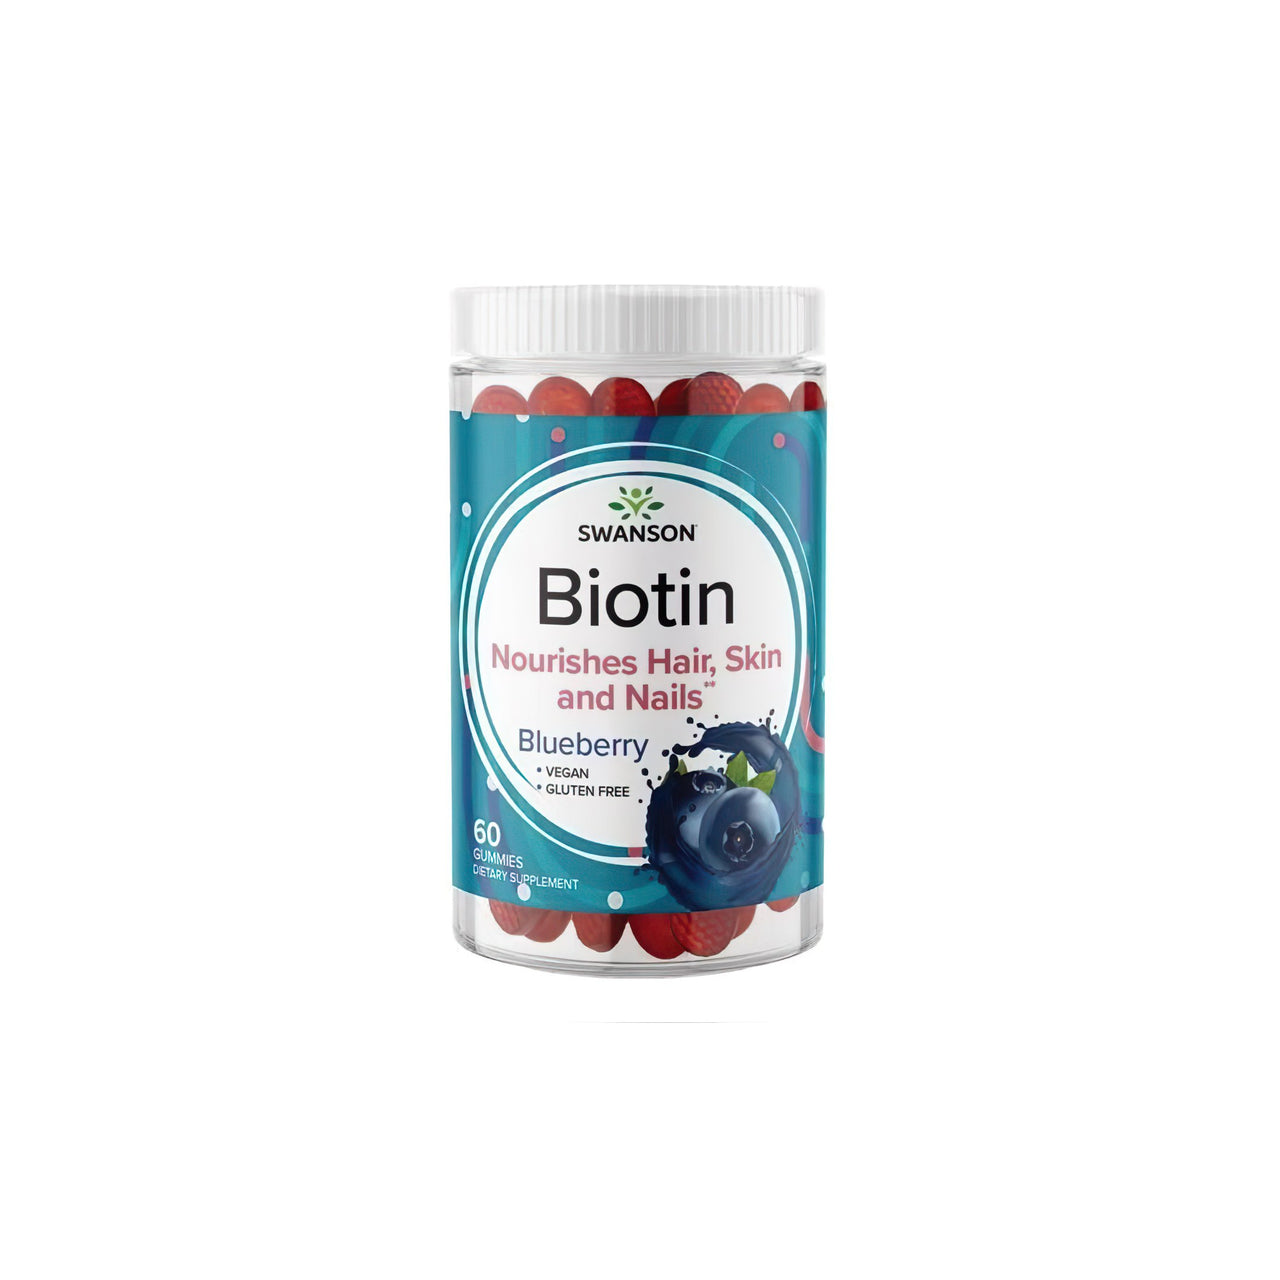 A jar of Swanson's Biotin 5000 mcg 60 Gummies - Blueberry.